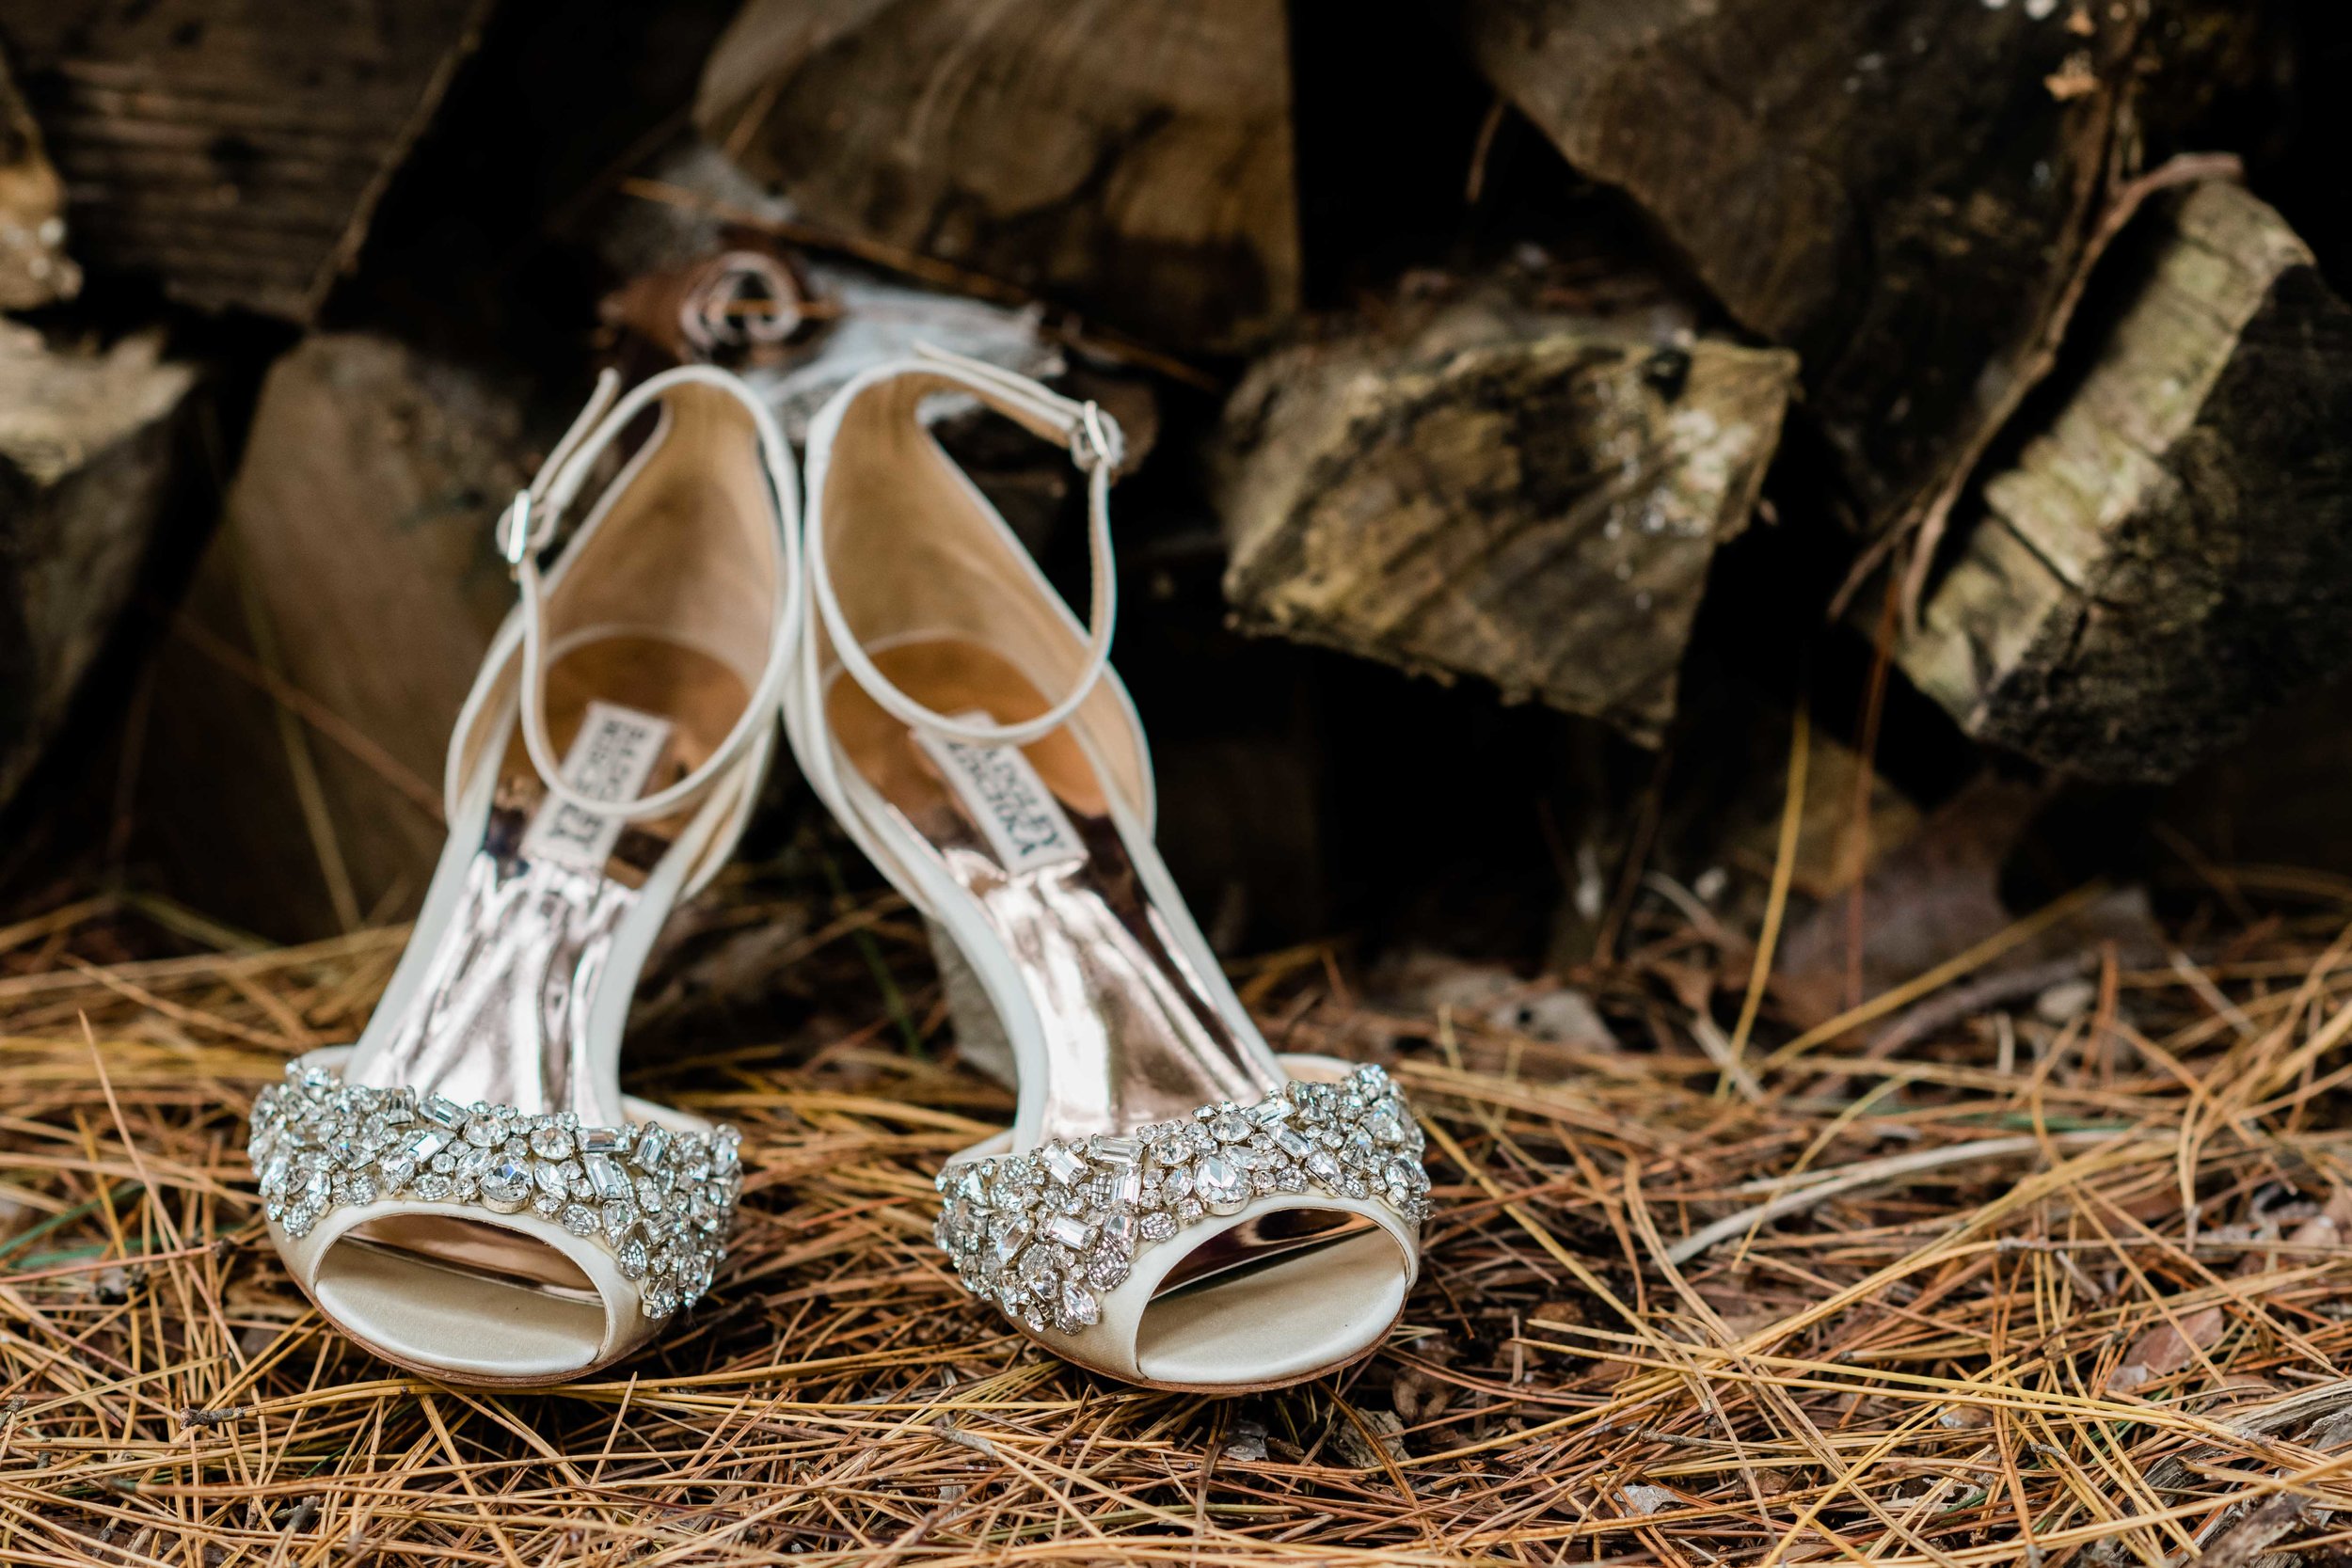 Badgley Mischka bridal shoes sitting on pine needles